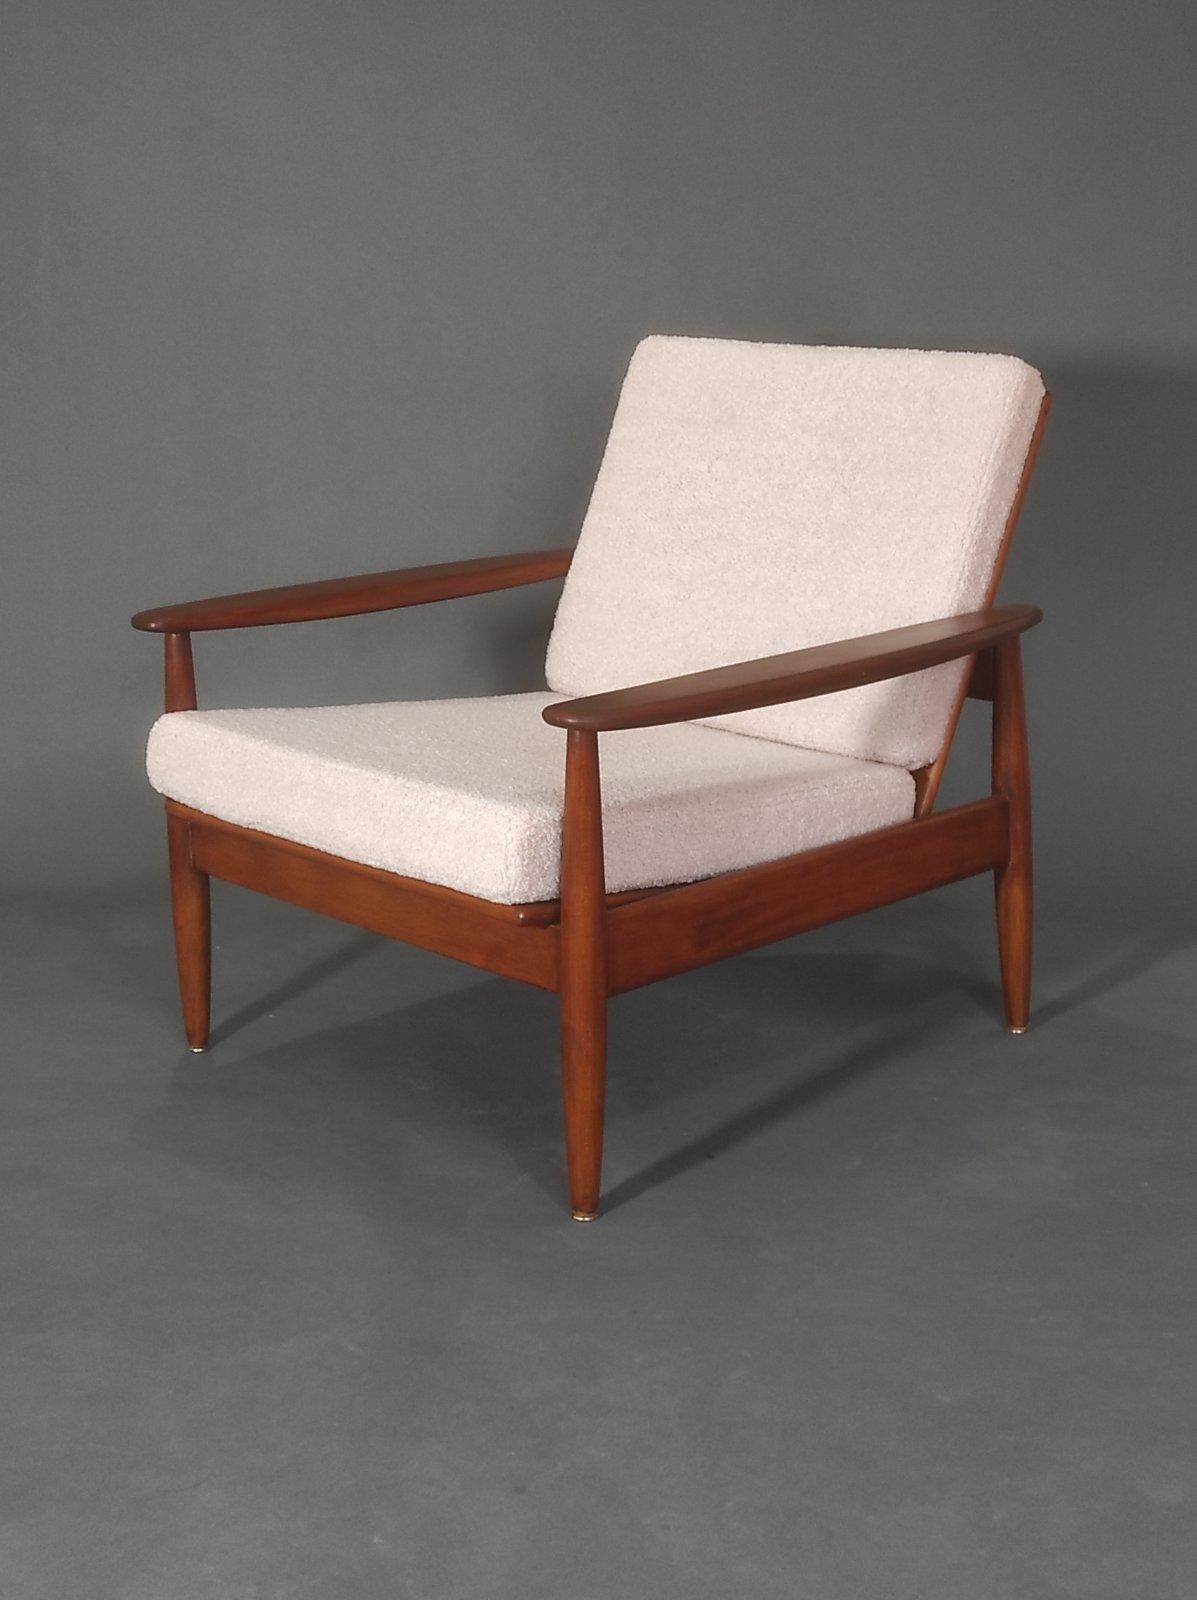 Mid-20th Century Danish Teak Longue Chair 1960s For Sale